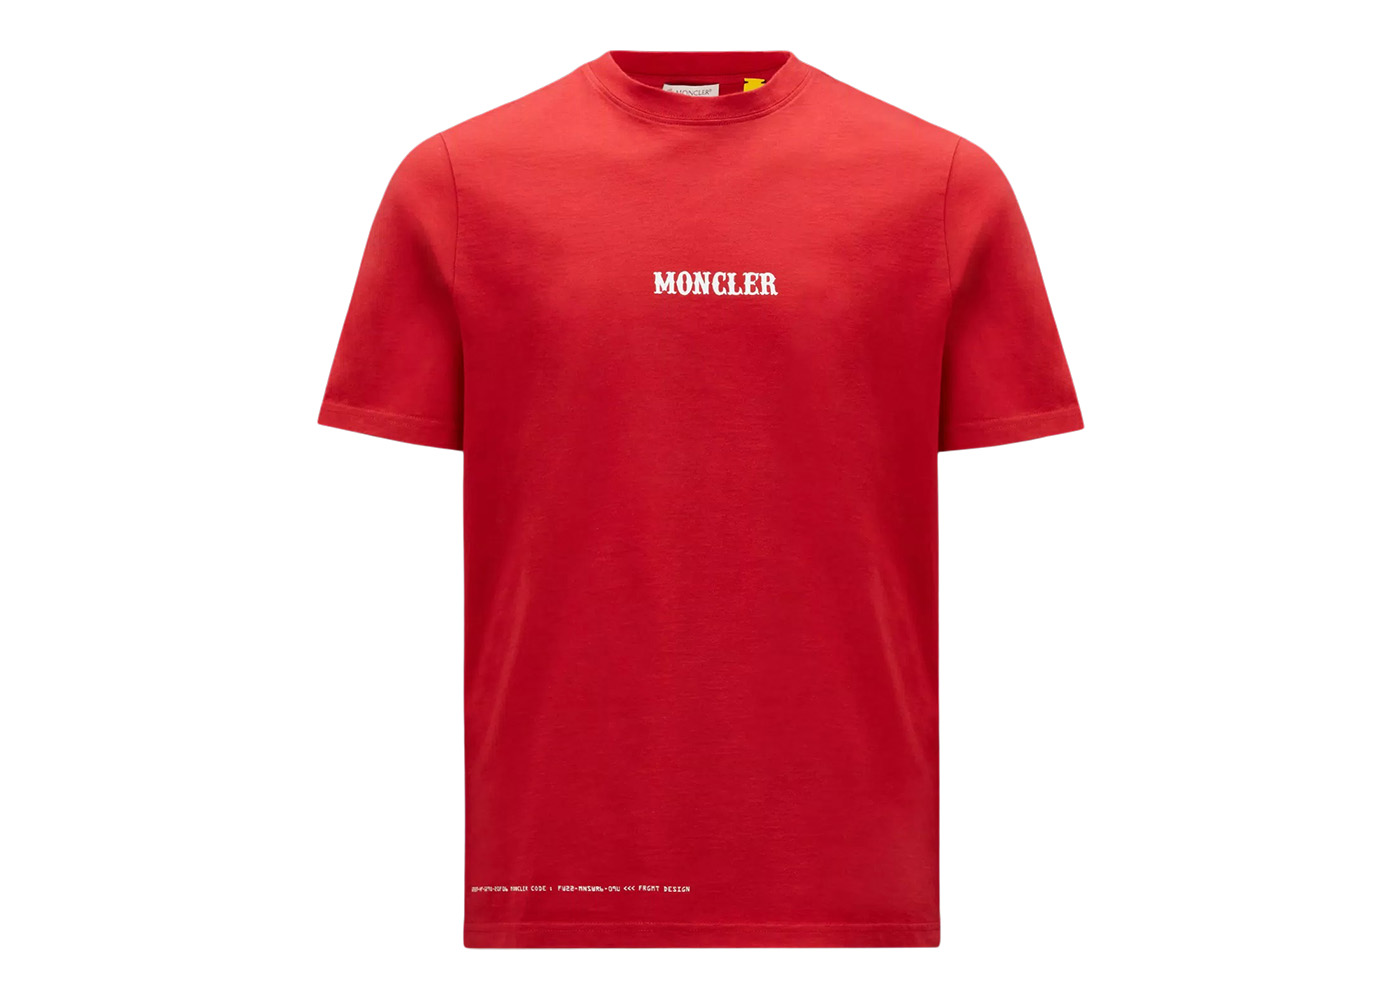 Moncler Hiroshi Fujiwara x Fragment Circus Motif T-Shirt Red Men's